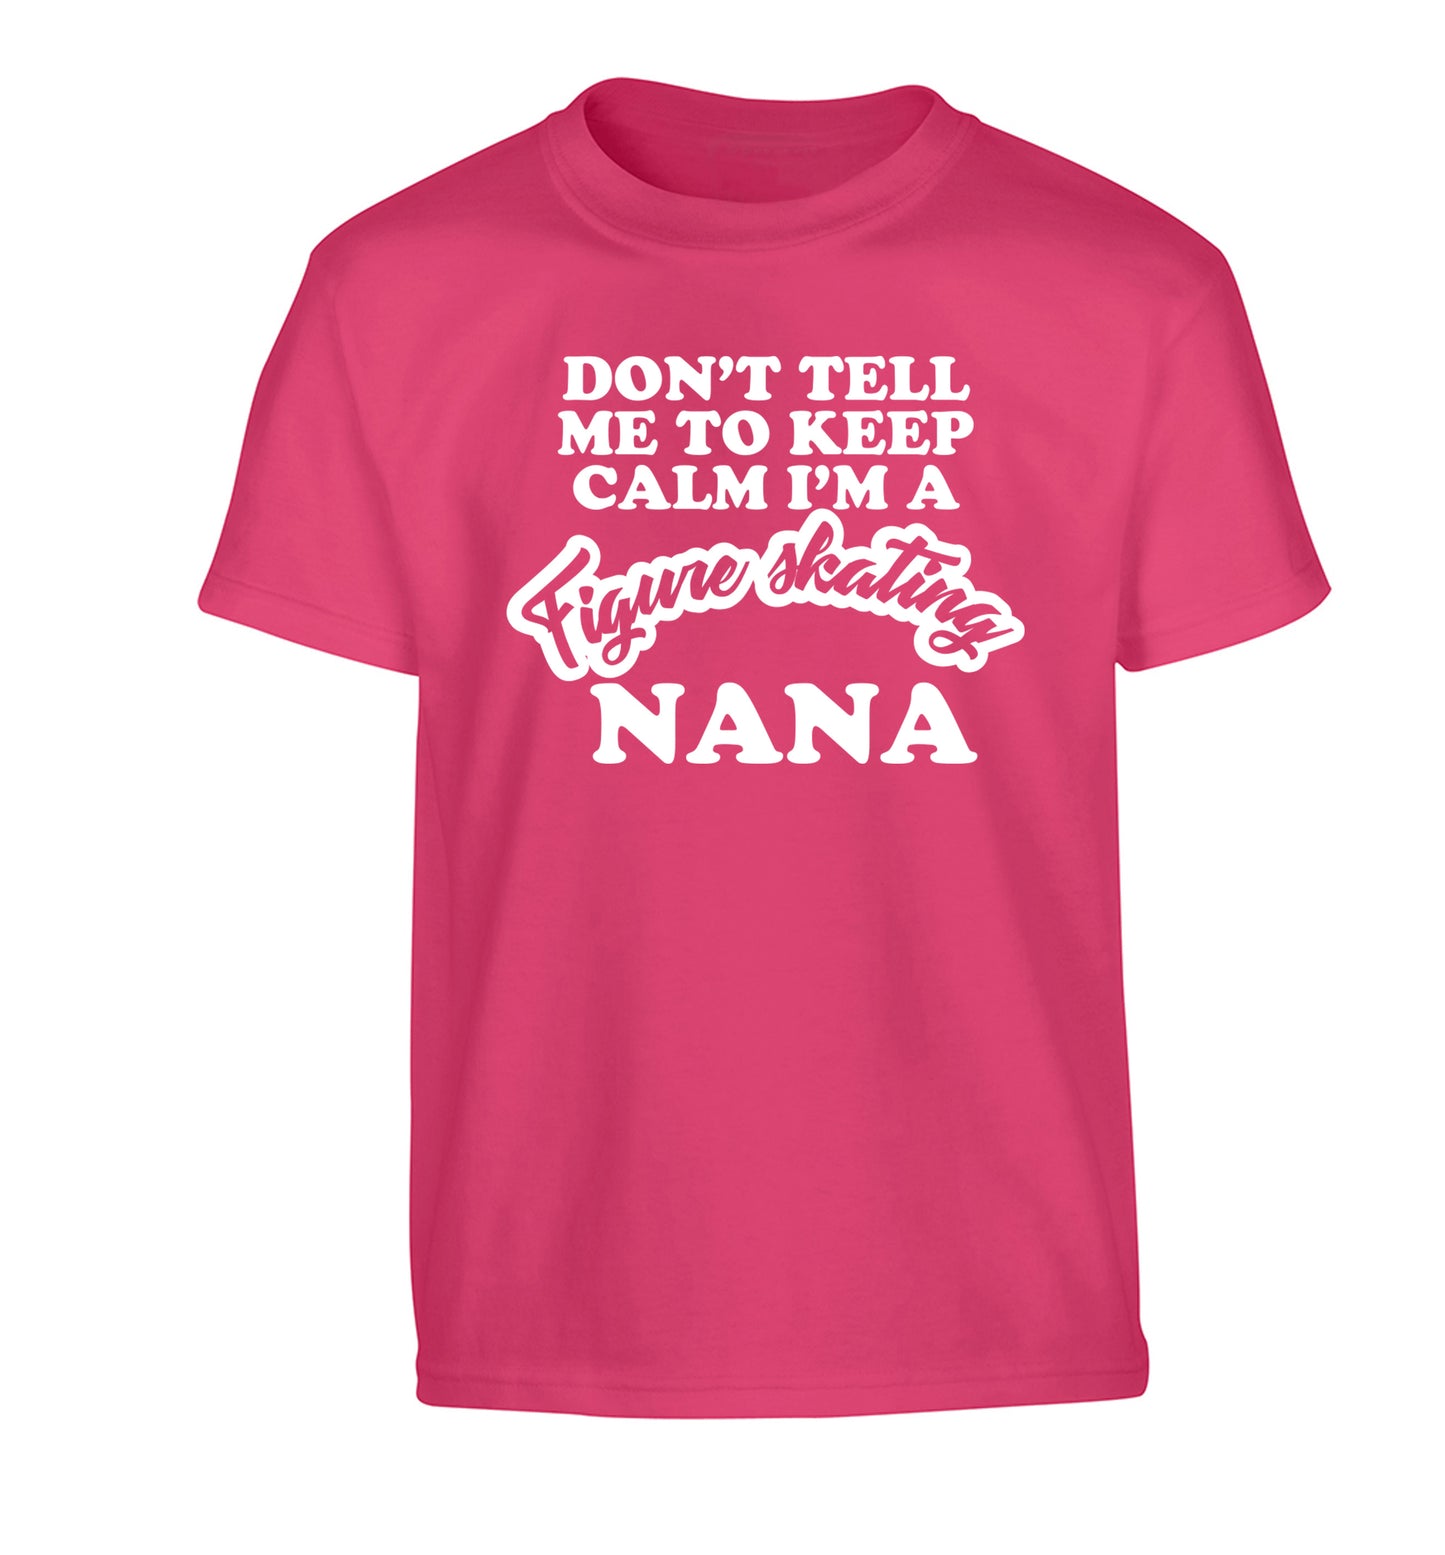 Don't tell me to keep calm I'm a figure skating nana Children's pink Tshirt 12-14 Years